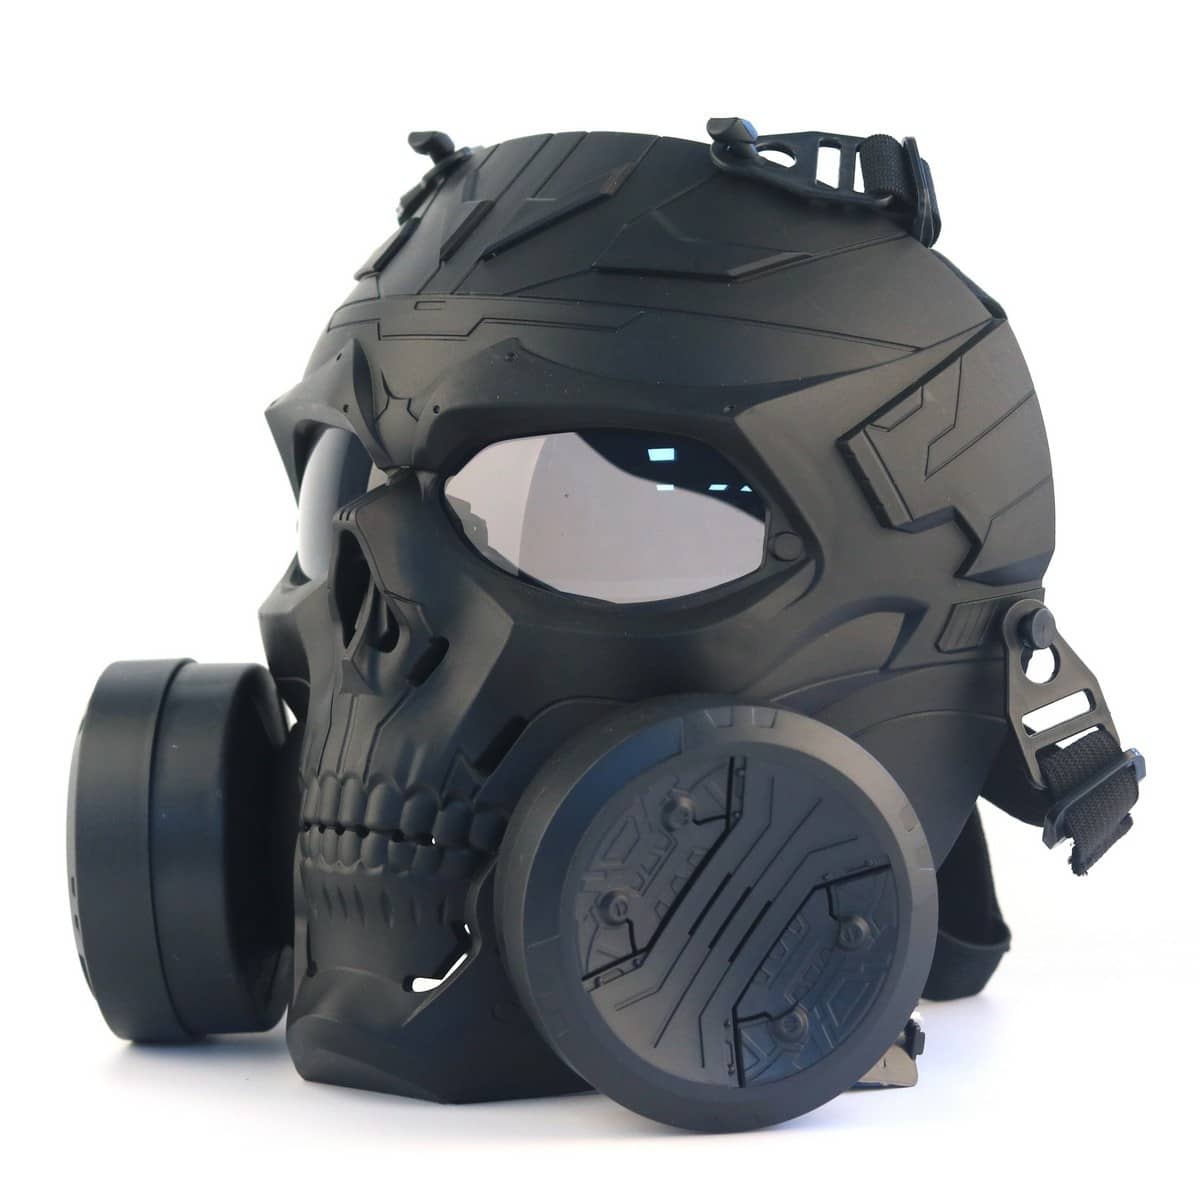 Masque Airsoft Tête de mort 2 filtres